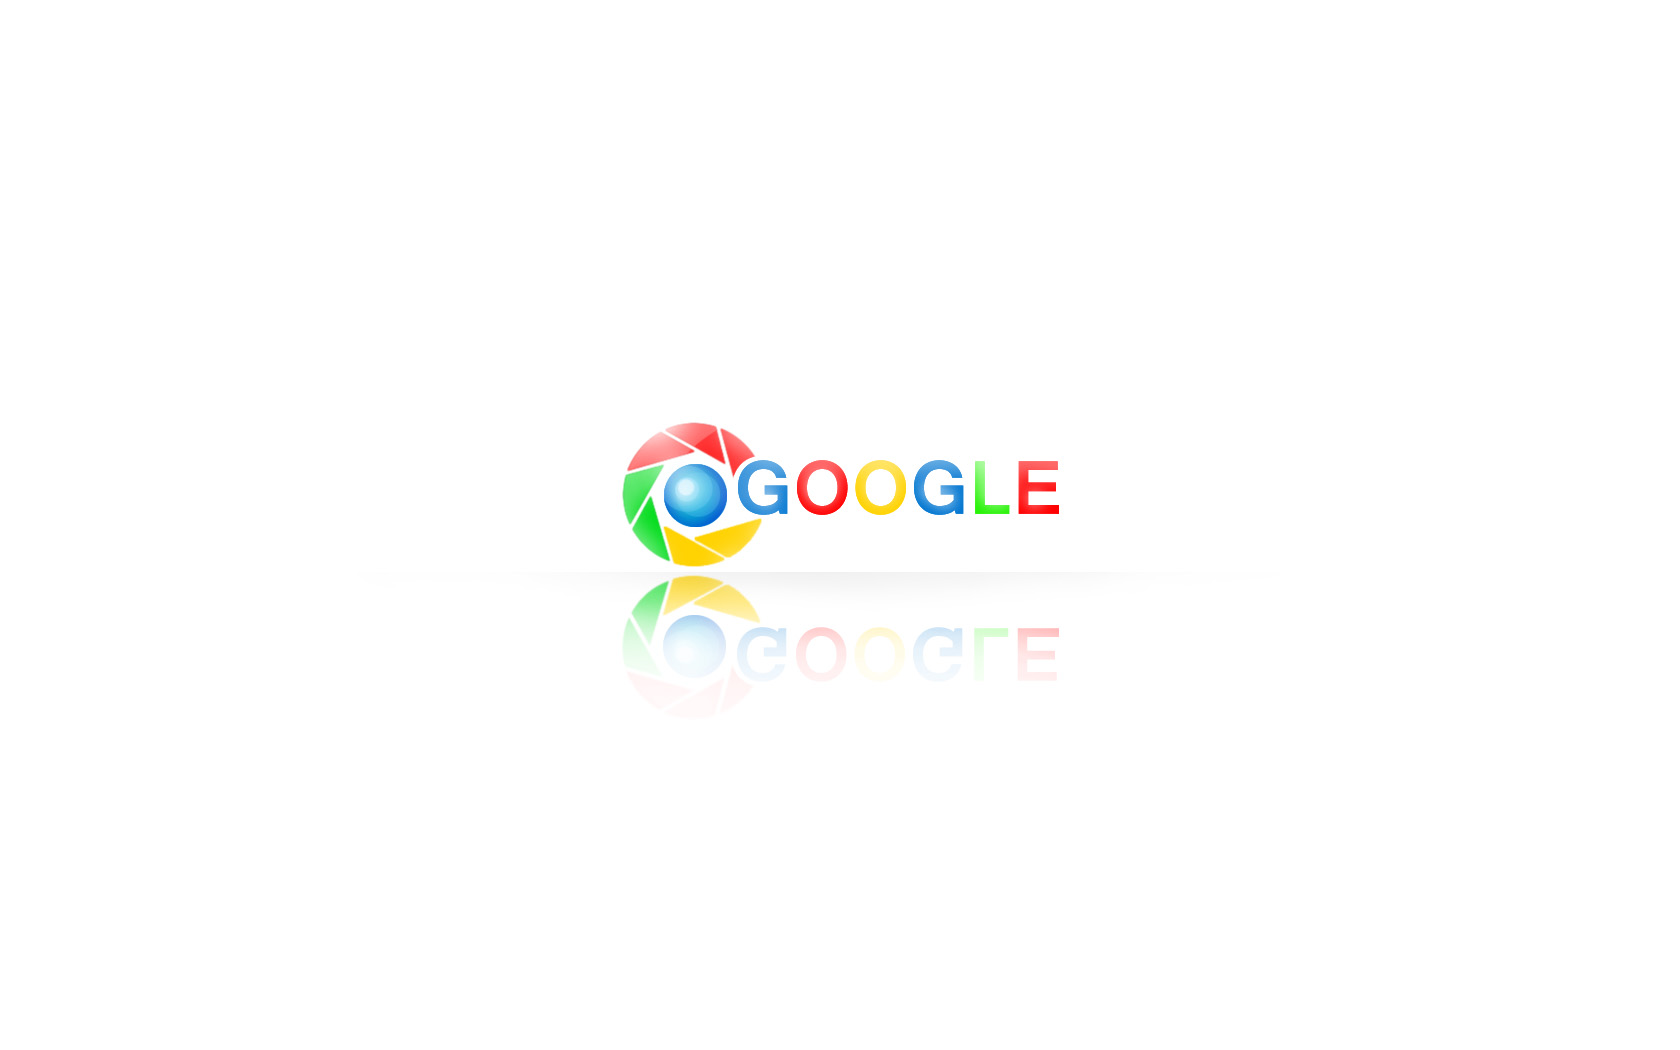 Chrome Wallpaper Google Myspace Background